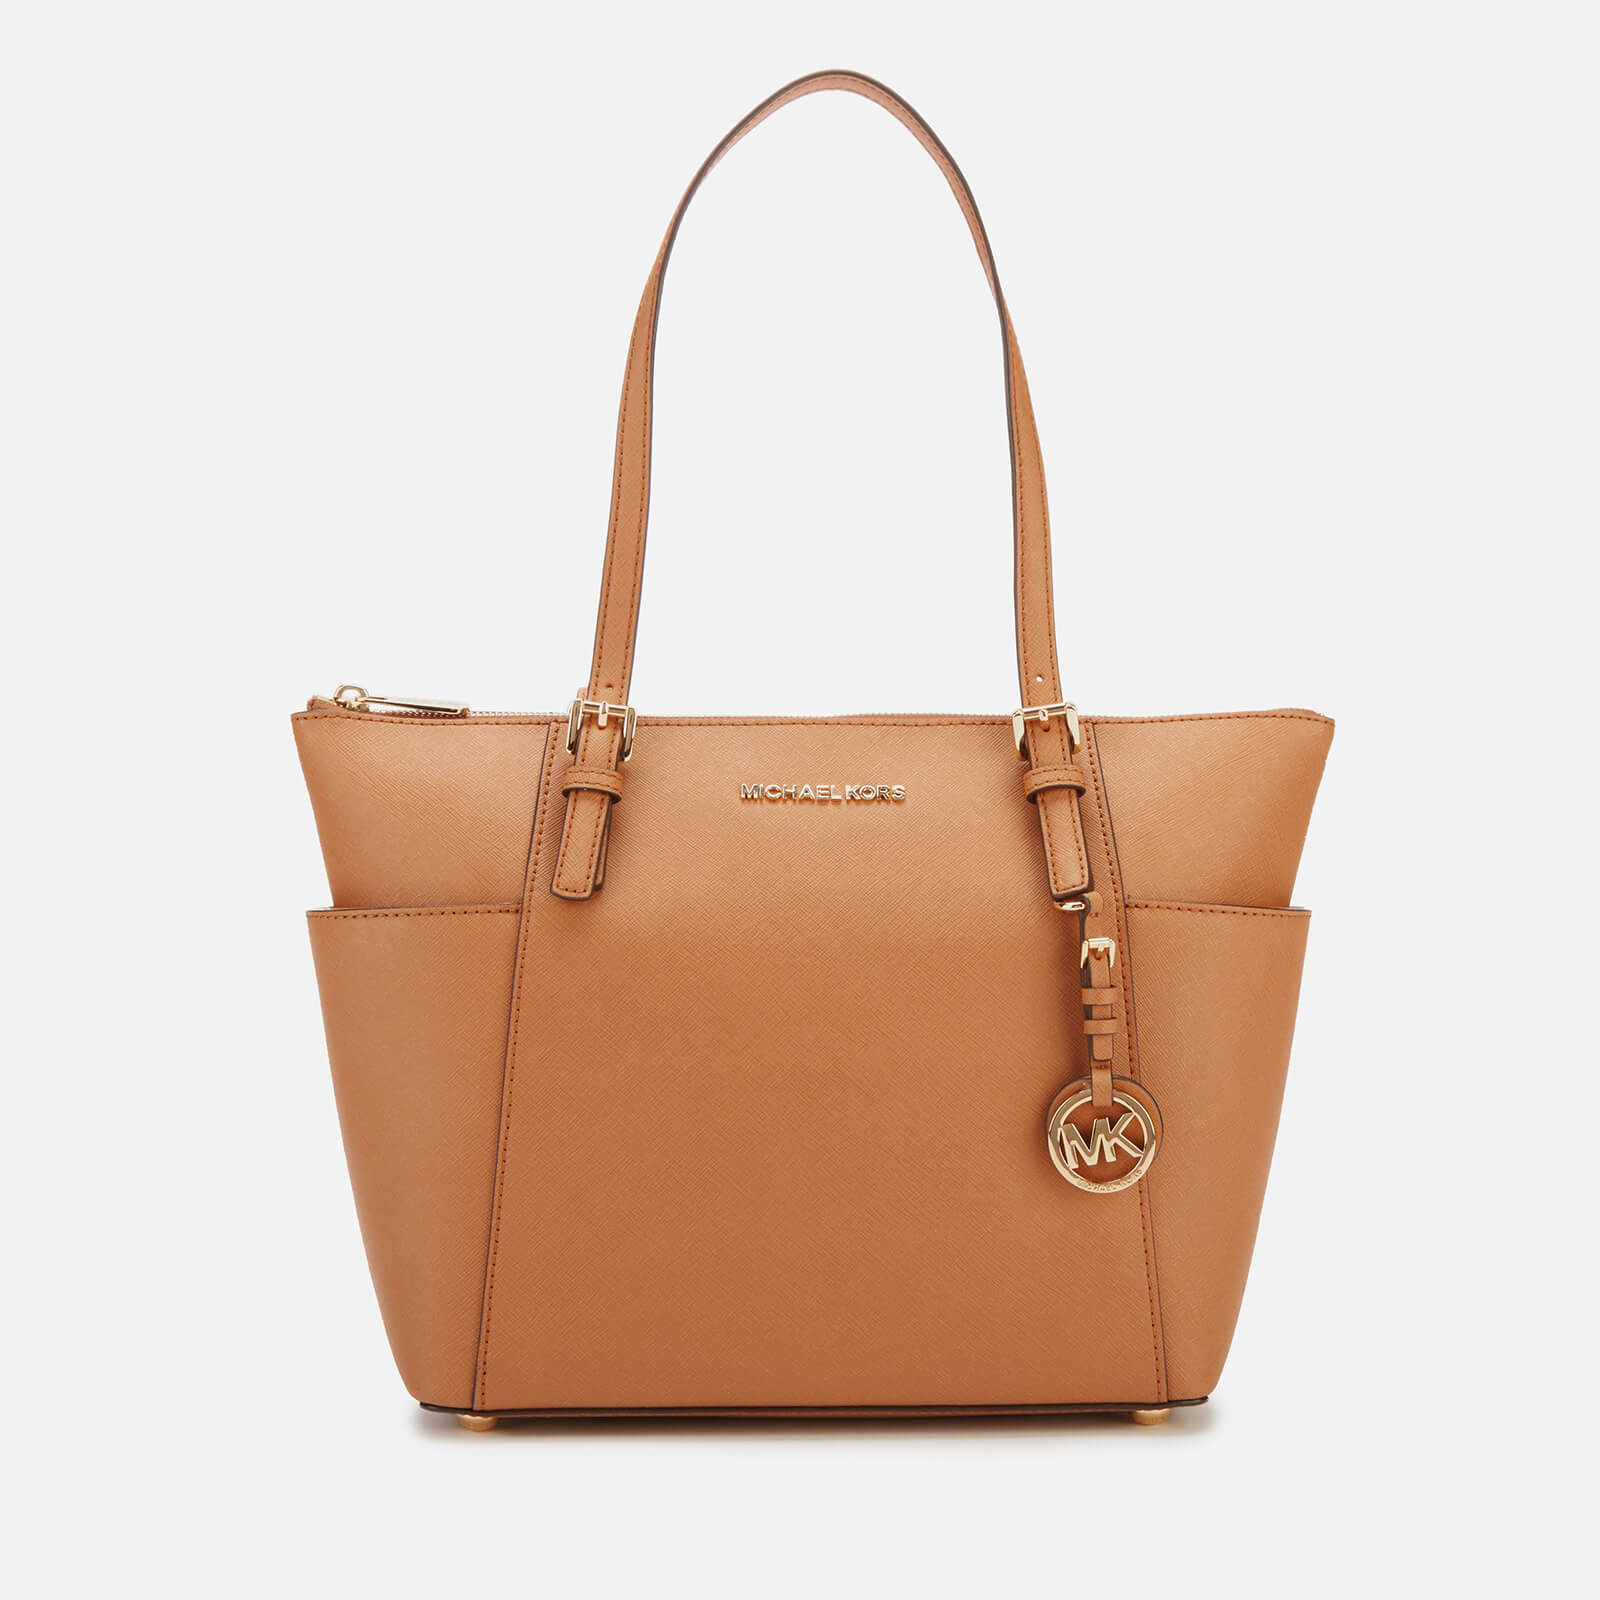 women's michael kors handbags